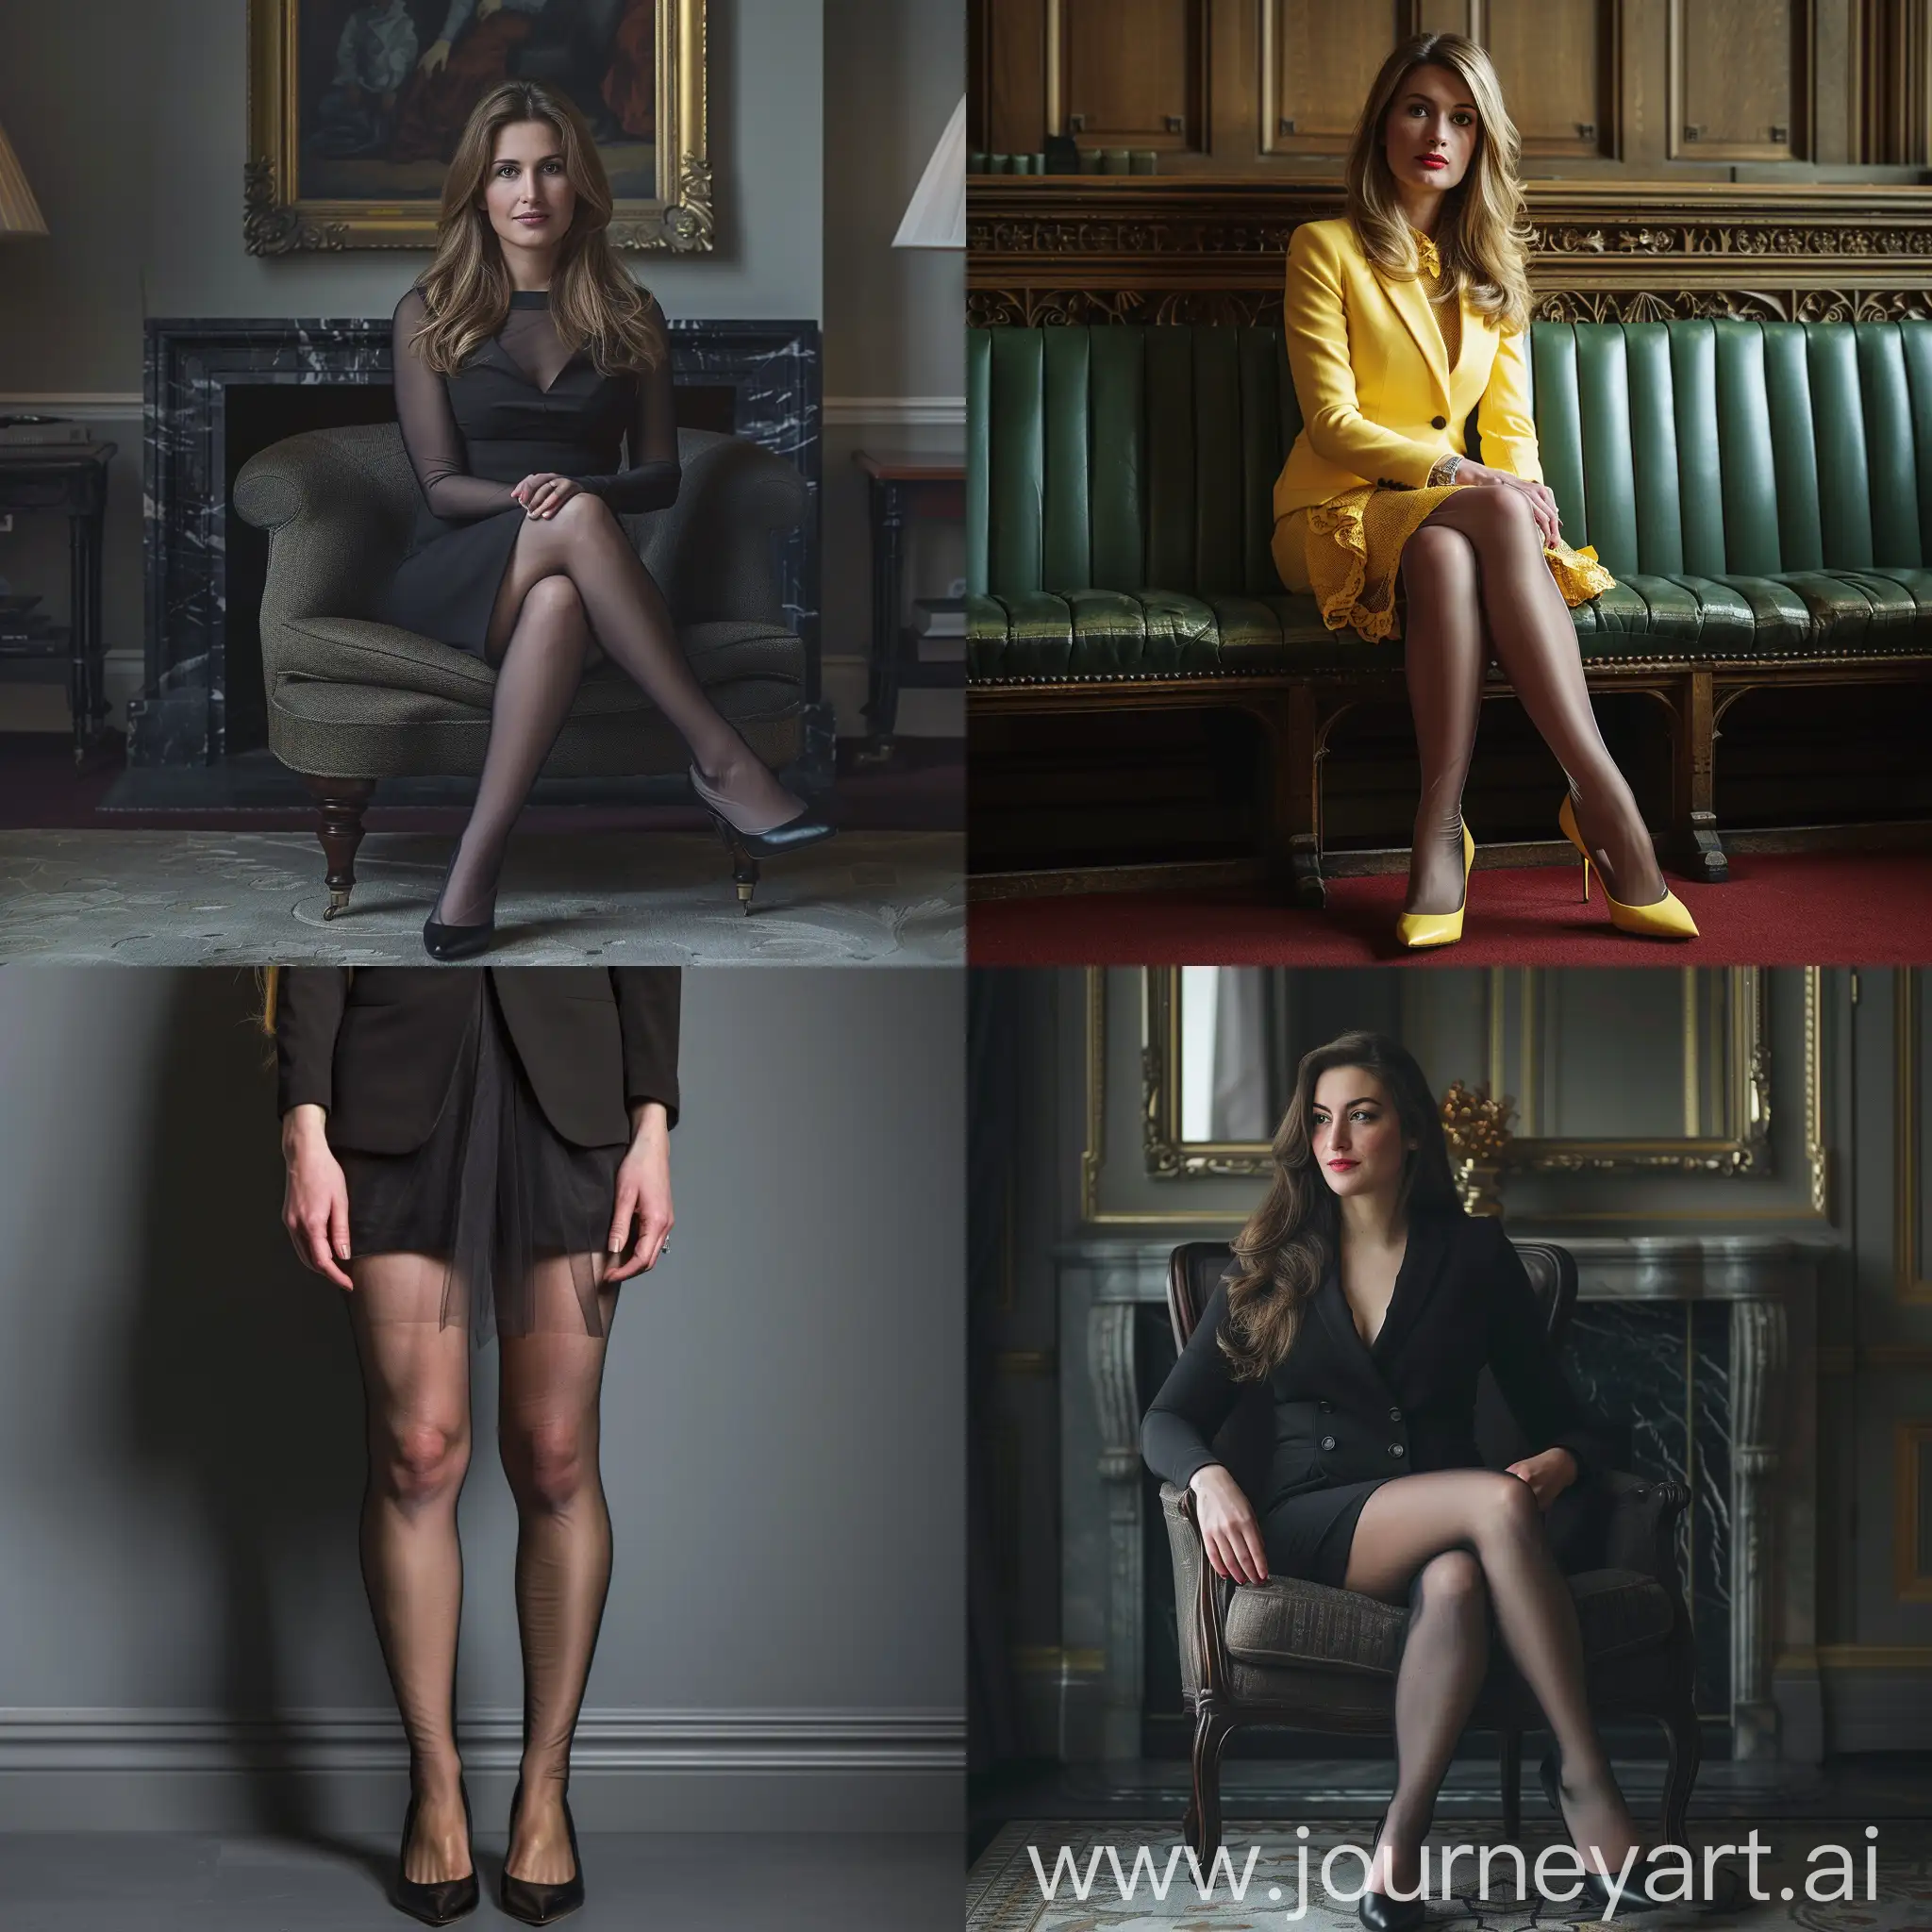 Elegant-Female-UK-Politician-in-Sheer-Tights-and-Heels